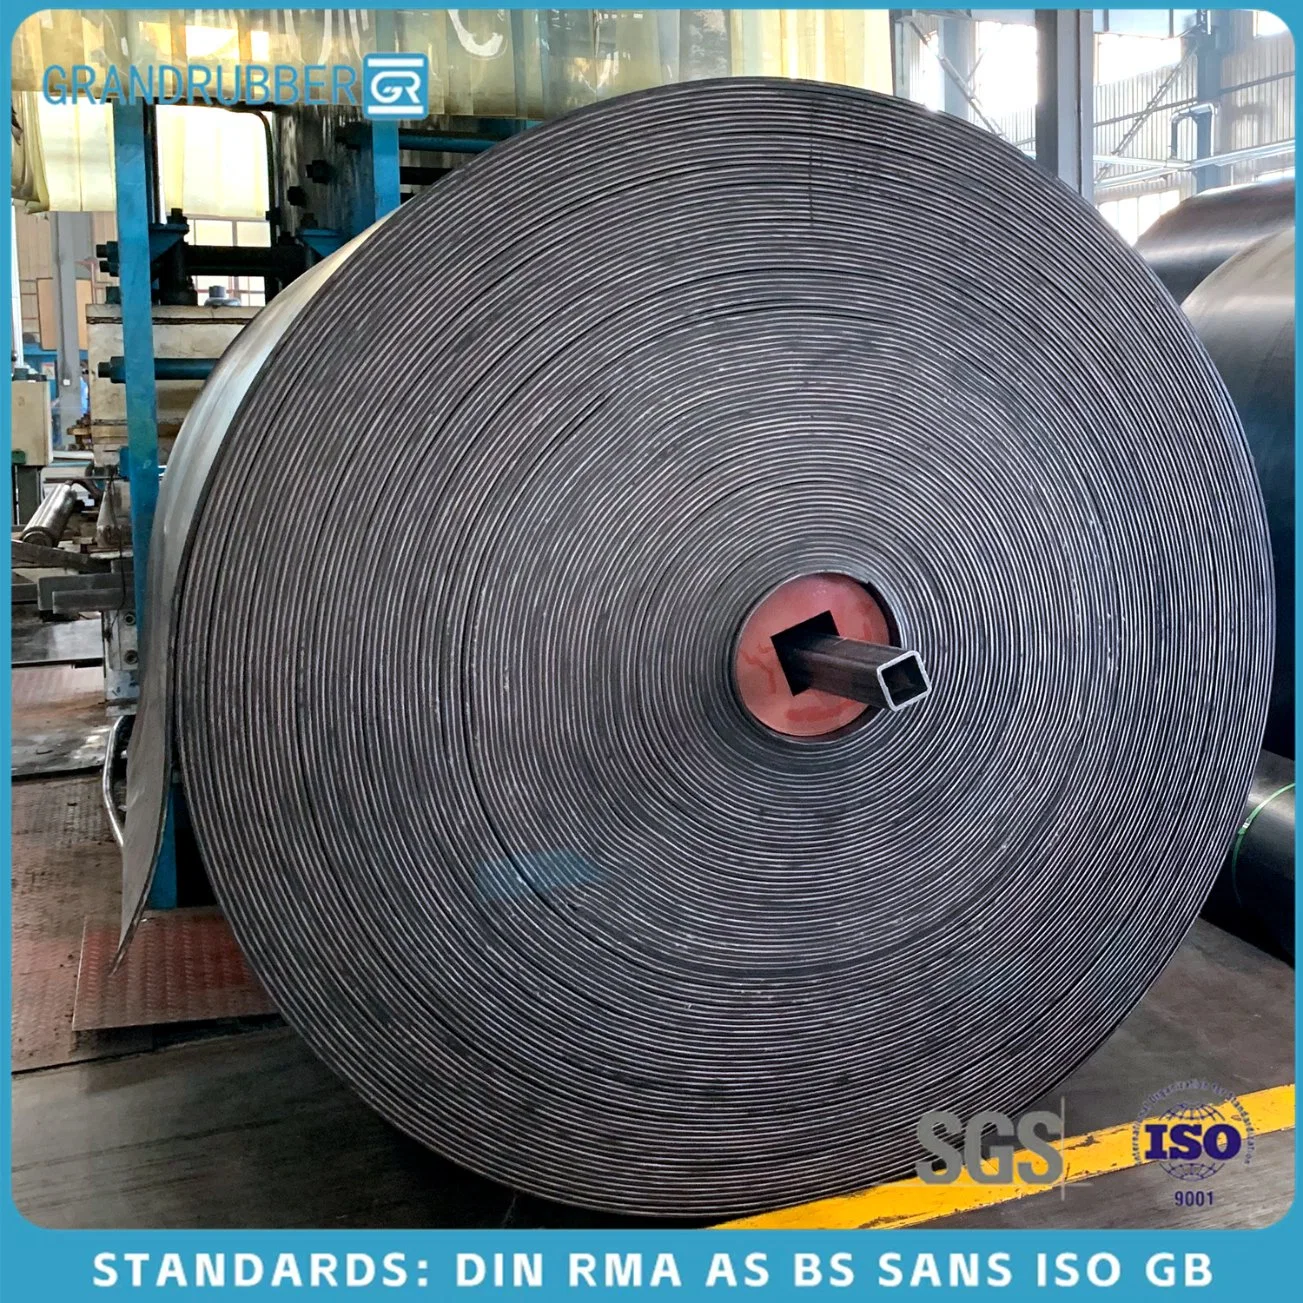 Heat Resistant Nylon Nn/Cc/Ep Fabric Endless Fabric Nn150 Industrial Cutting-Edge Rubber Conveyor Belt for Belt Conveyors